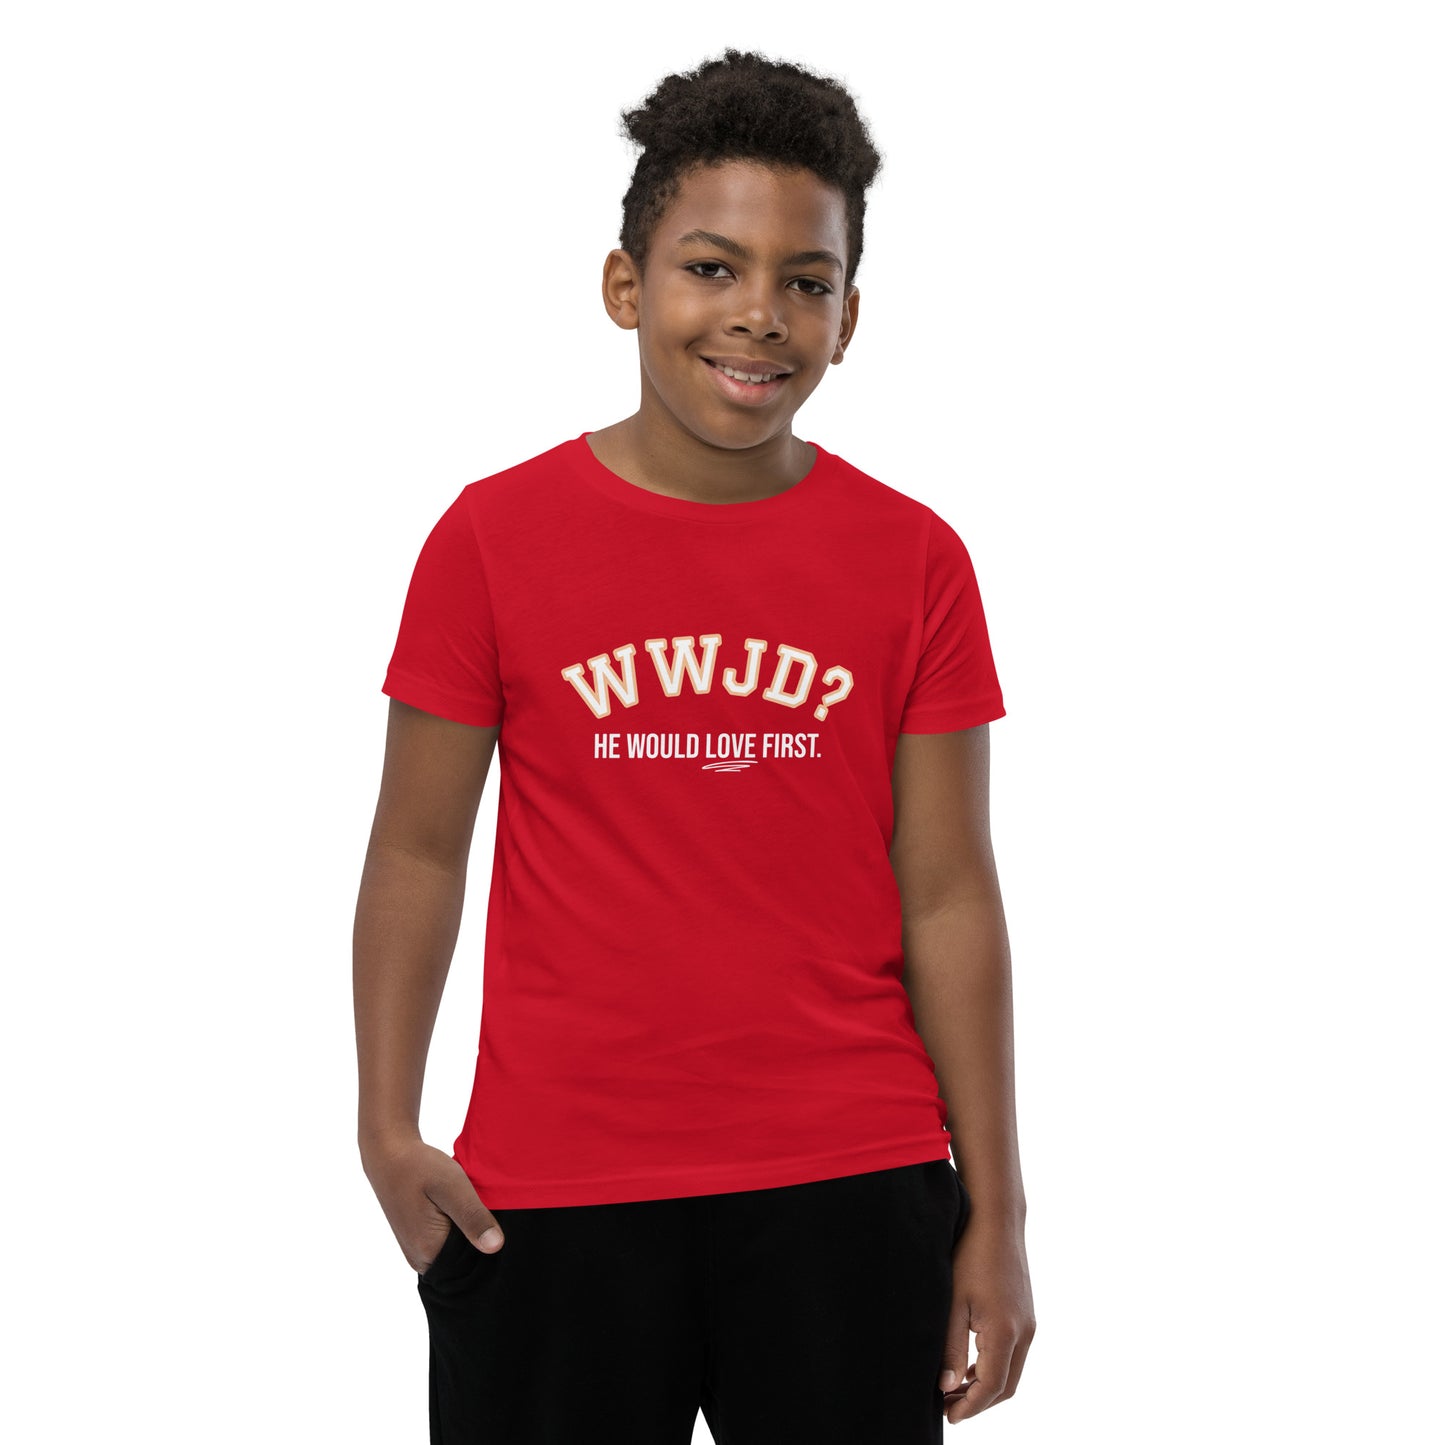 WWJD Youth Short Sleeve T-Shirt